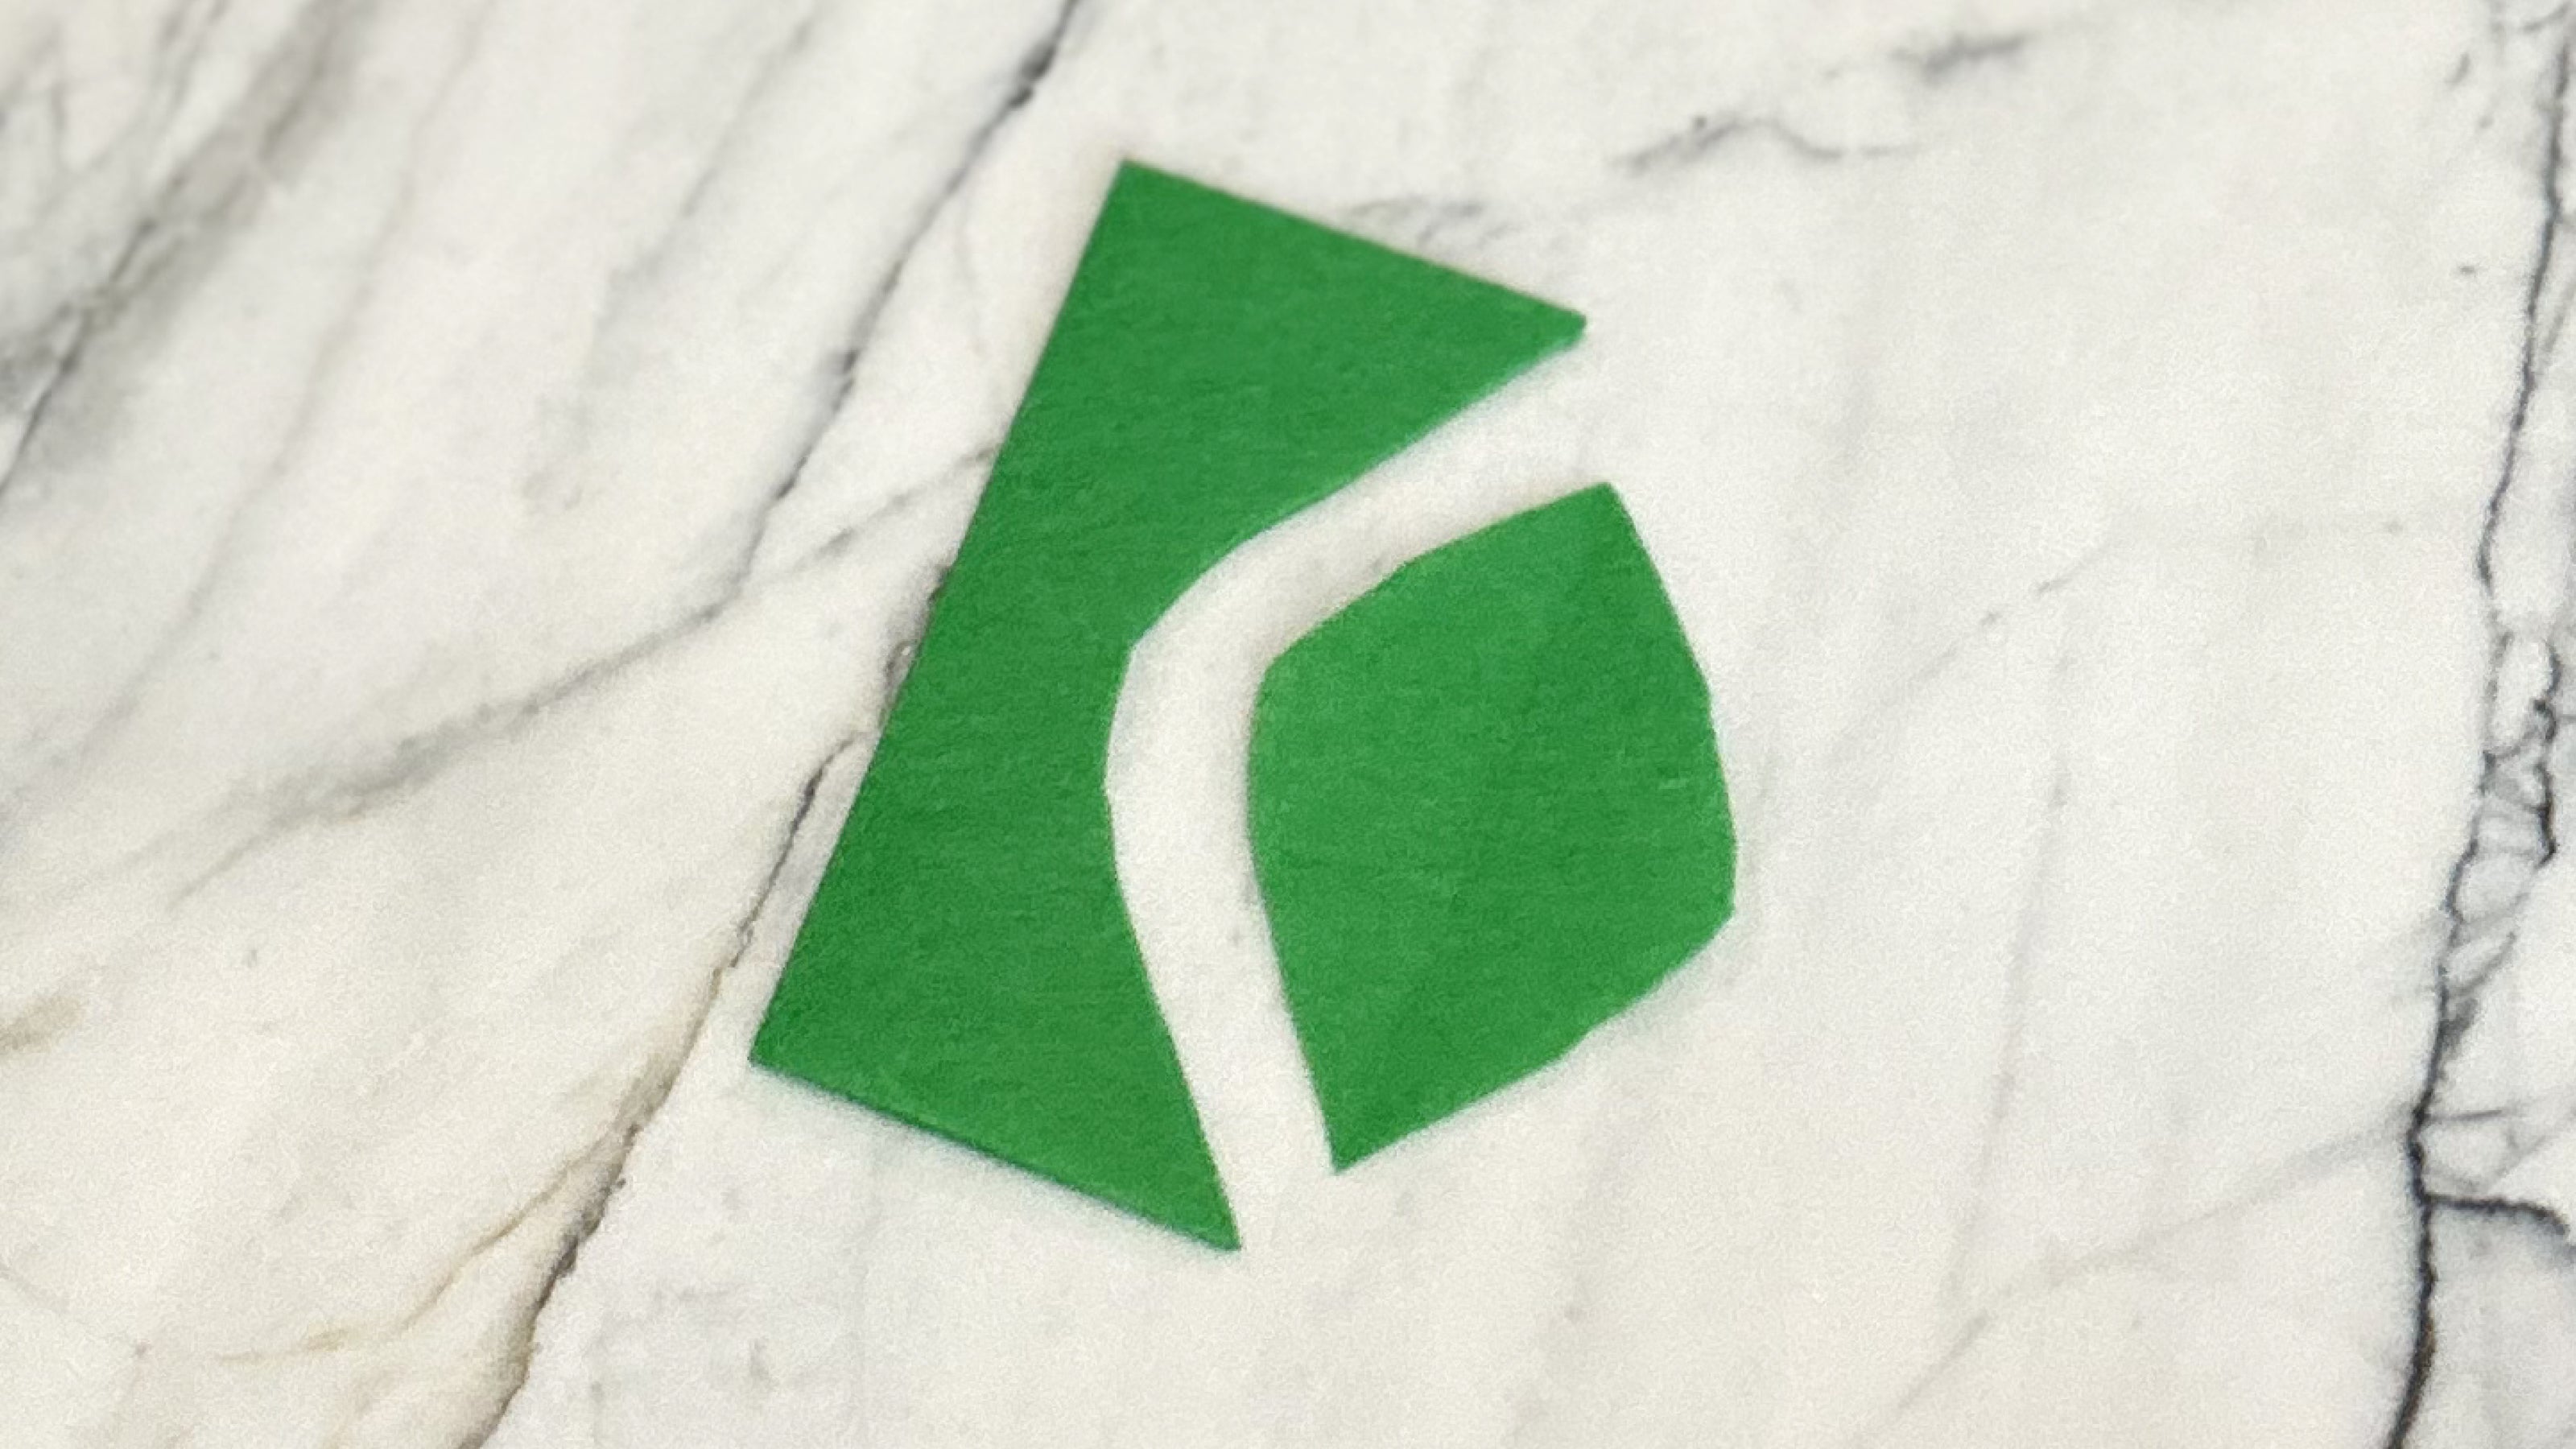 An oval cut out of a piece of green felt